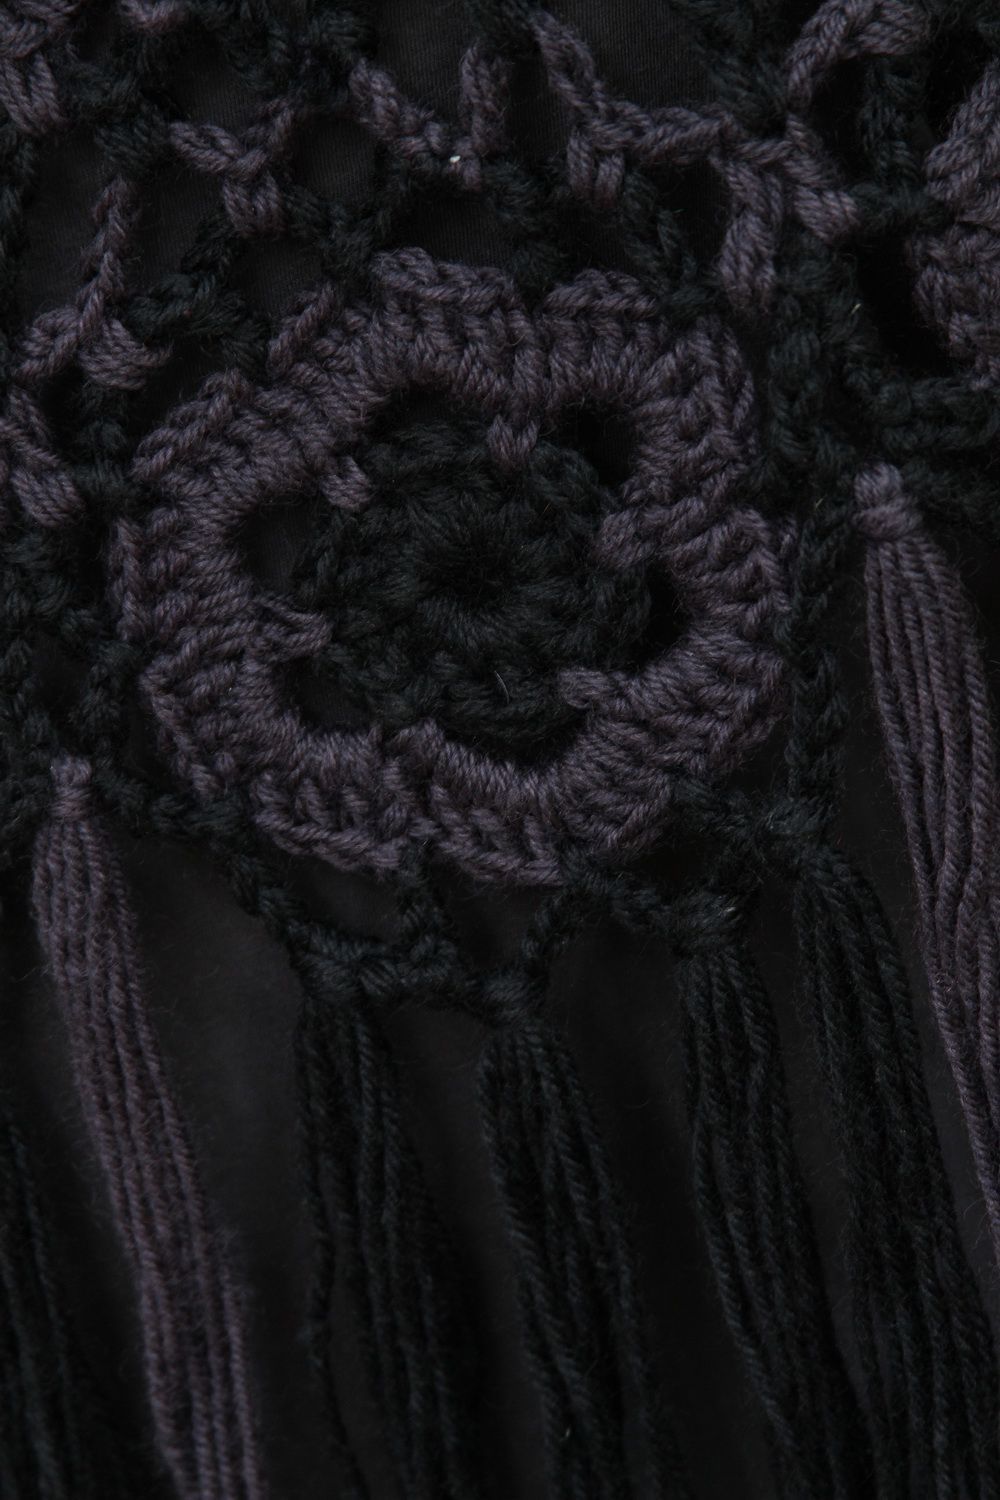 Crocheted cape photo 4